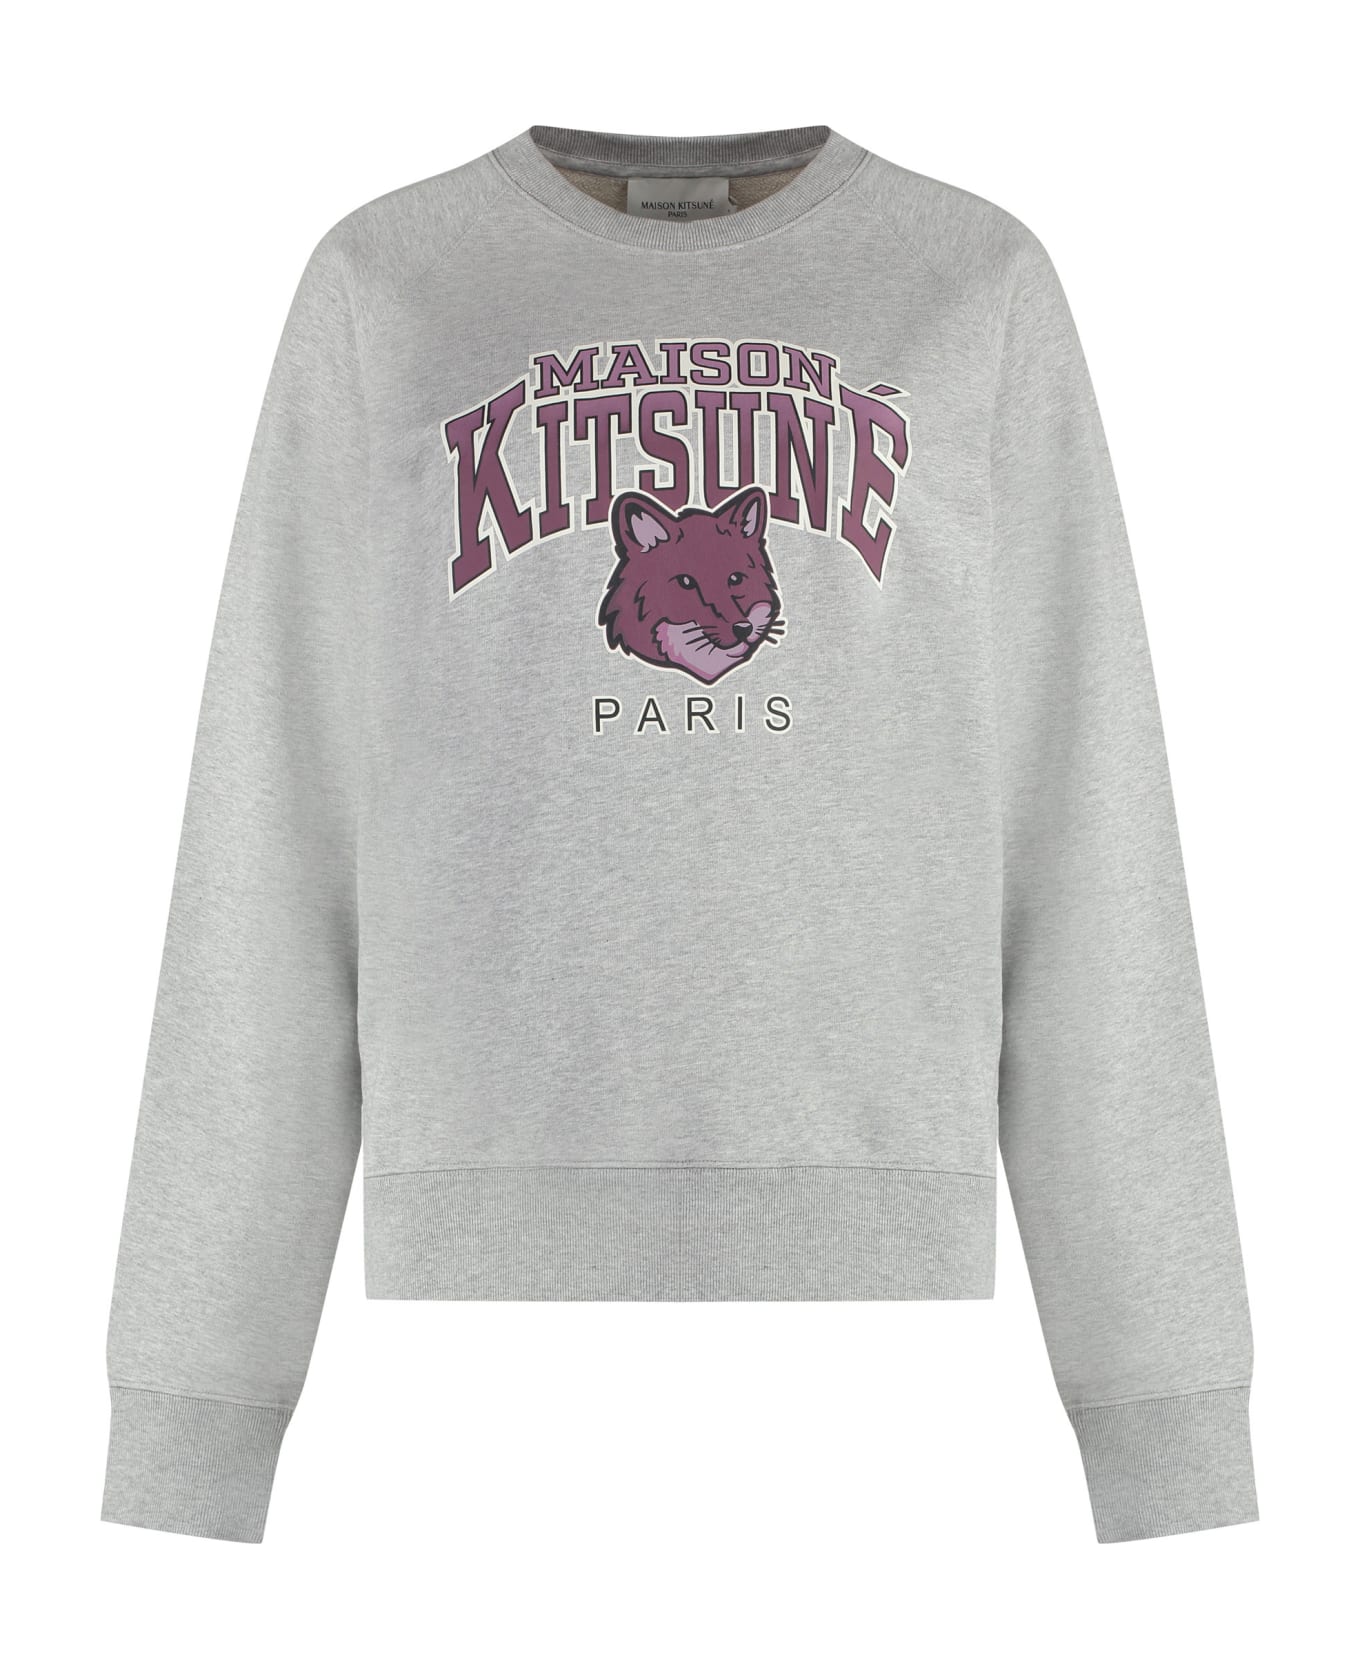 Maison Kitsuné Printed Cotton Sweatshirt - Grey